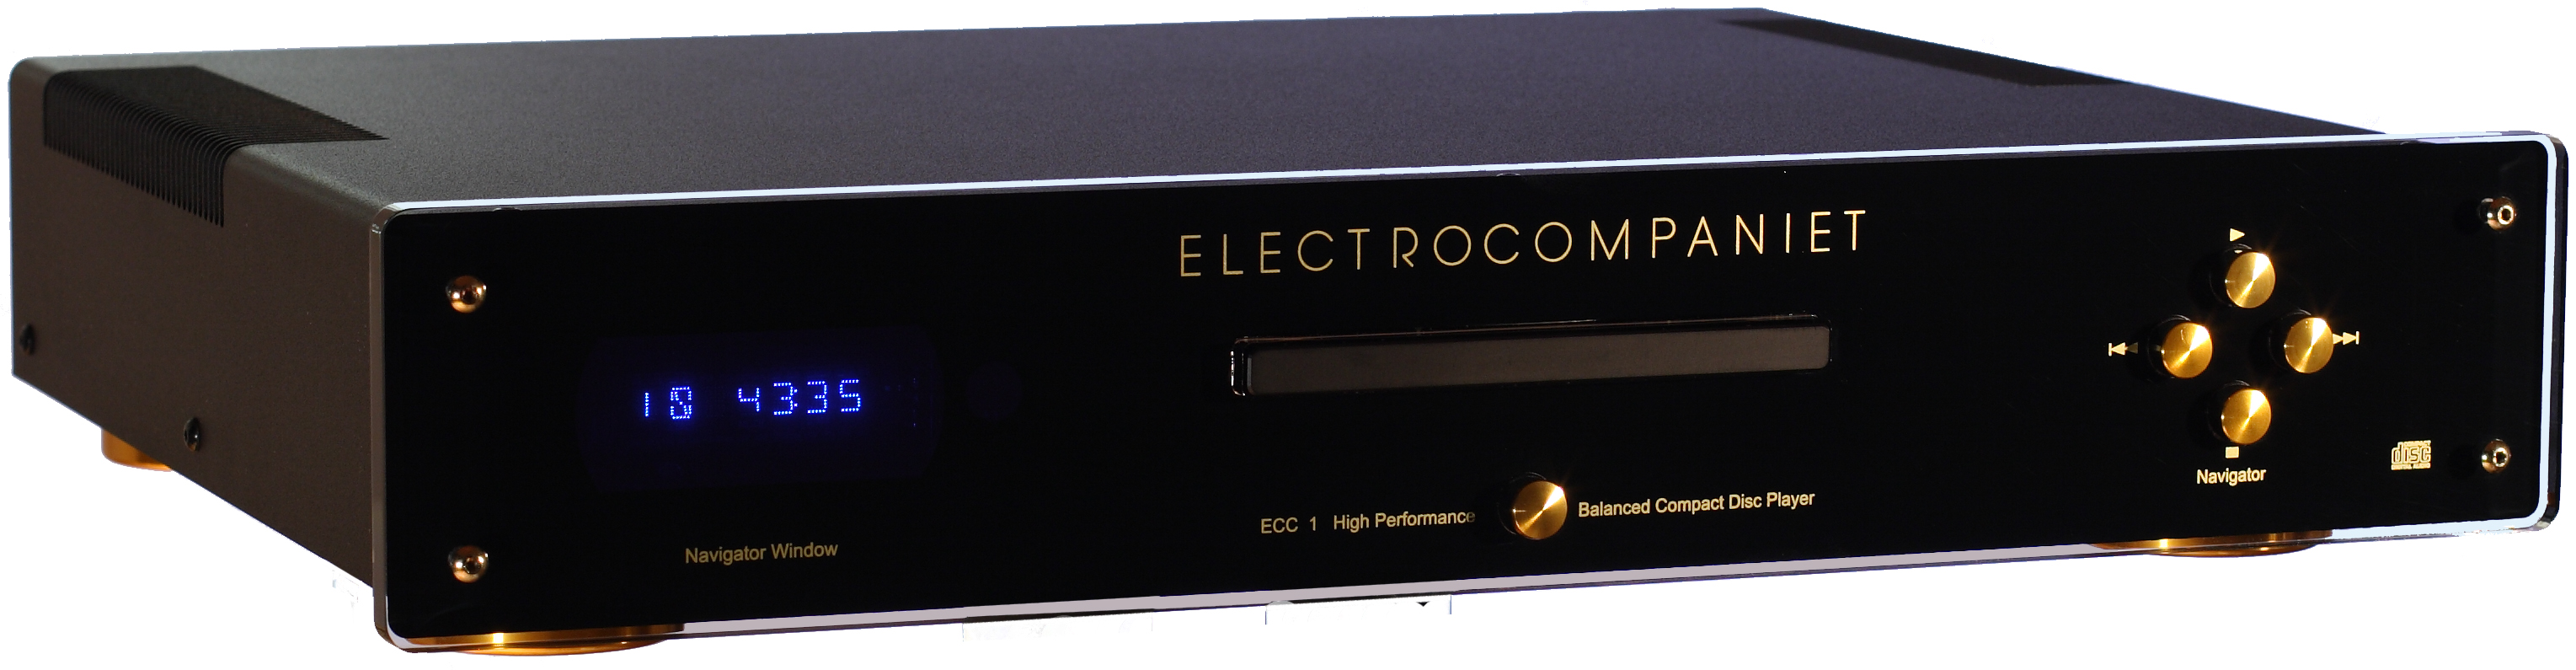 Der Thronräuber - ELECTROCOMPANIET ECC-1 Electrocompaniet ECC-1